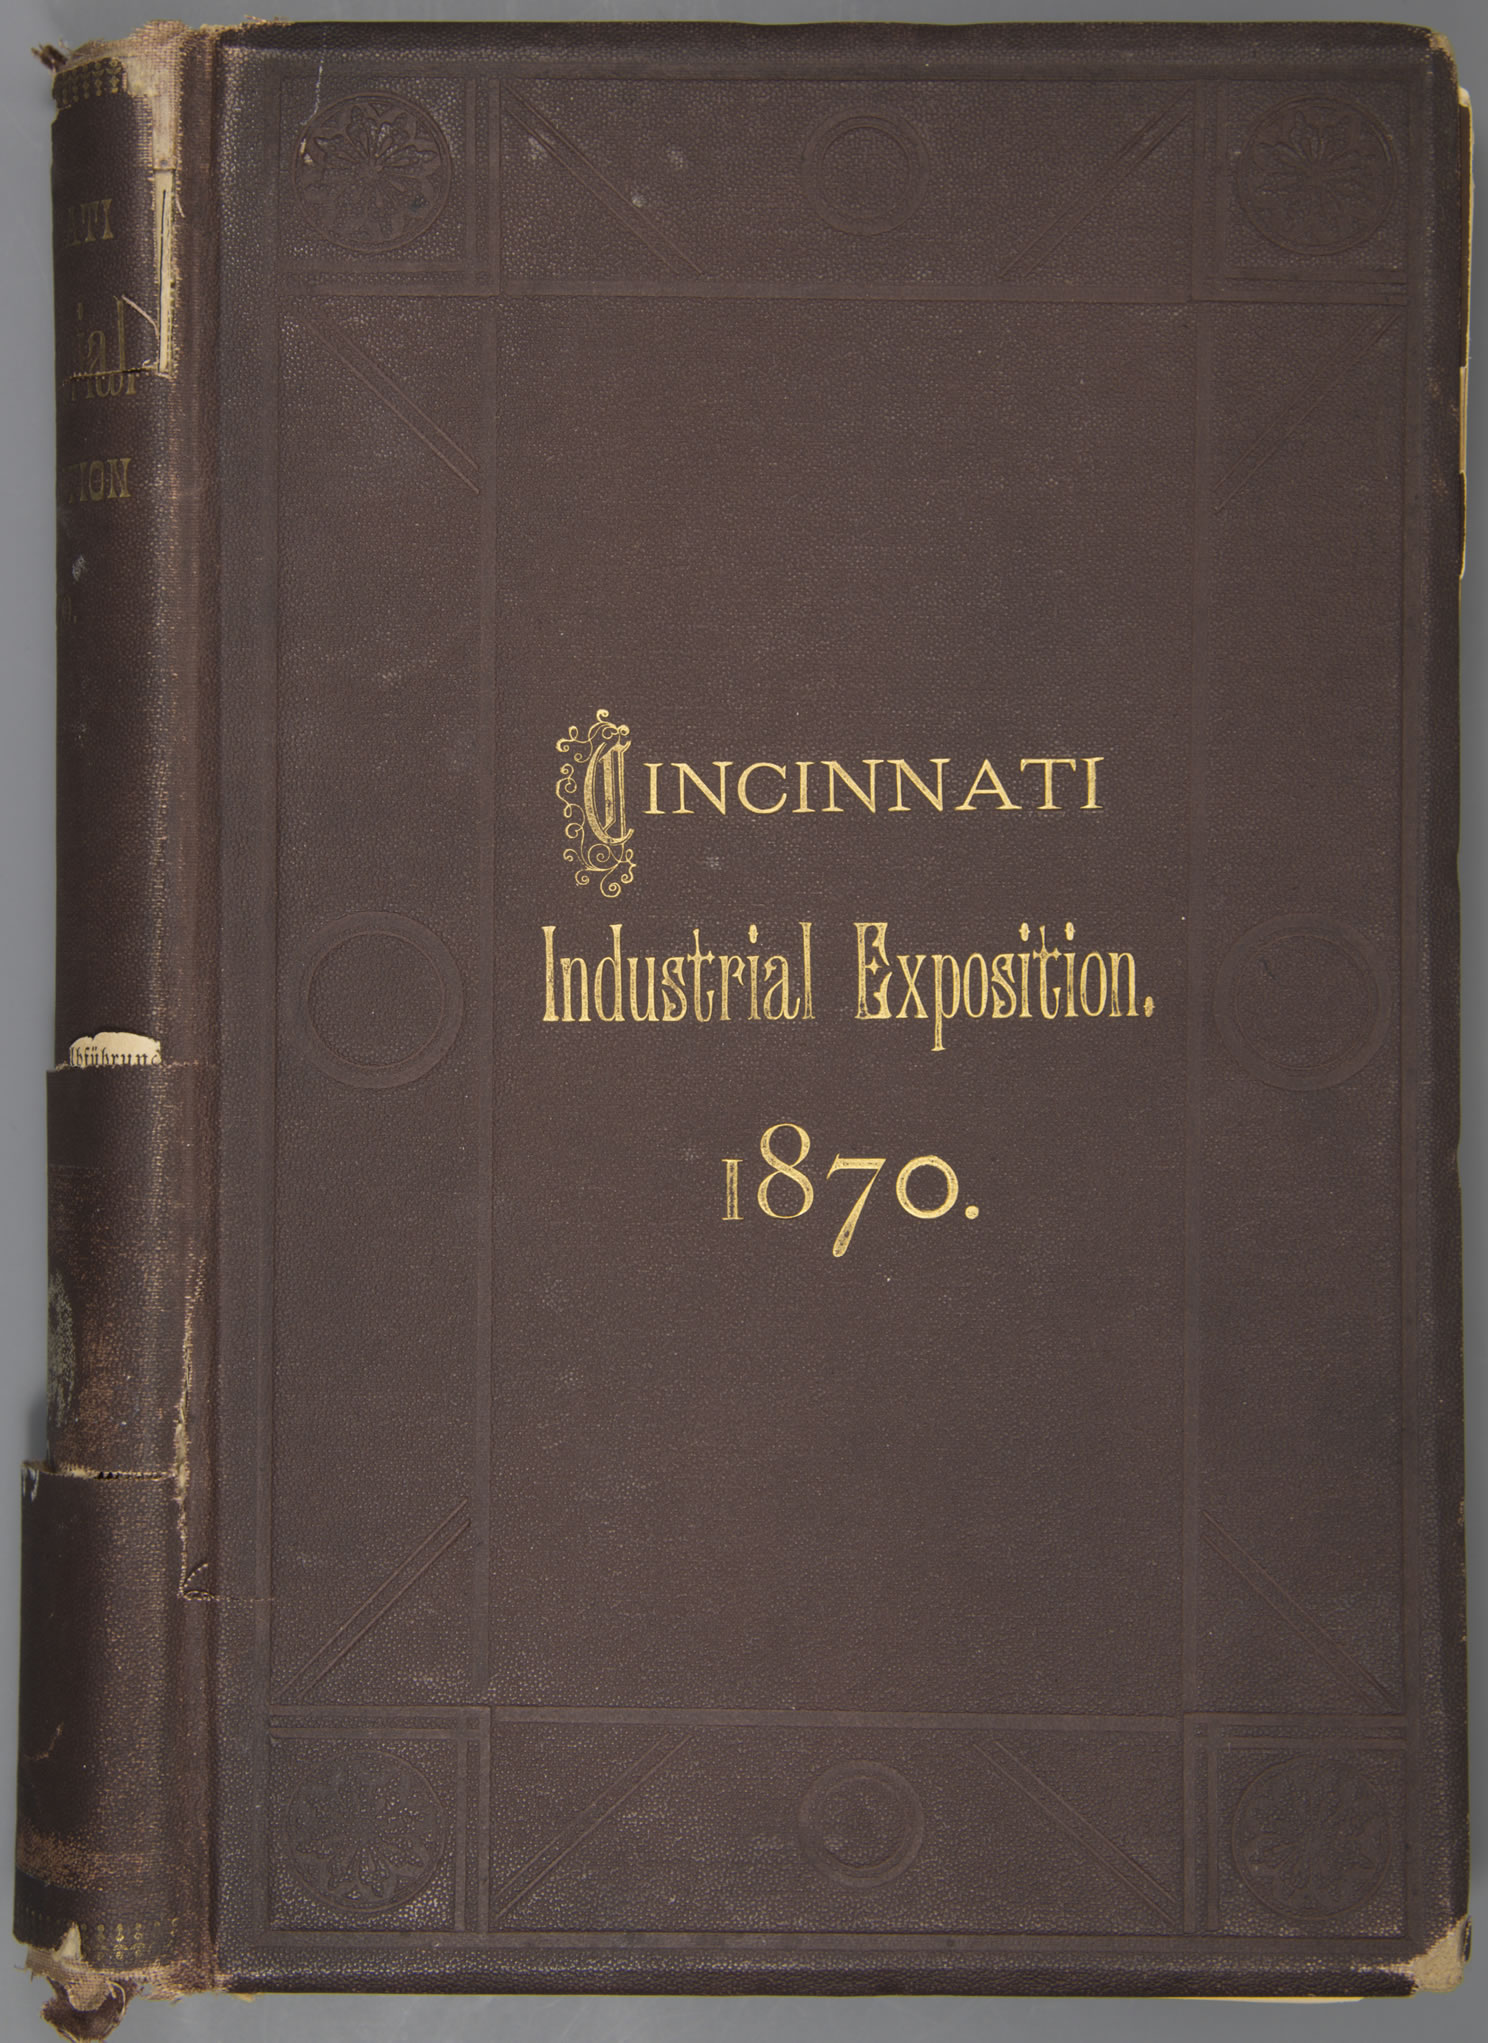 Report of the General Committee of the Cincinnati Industrial Exposition